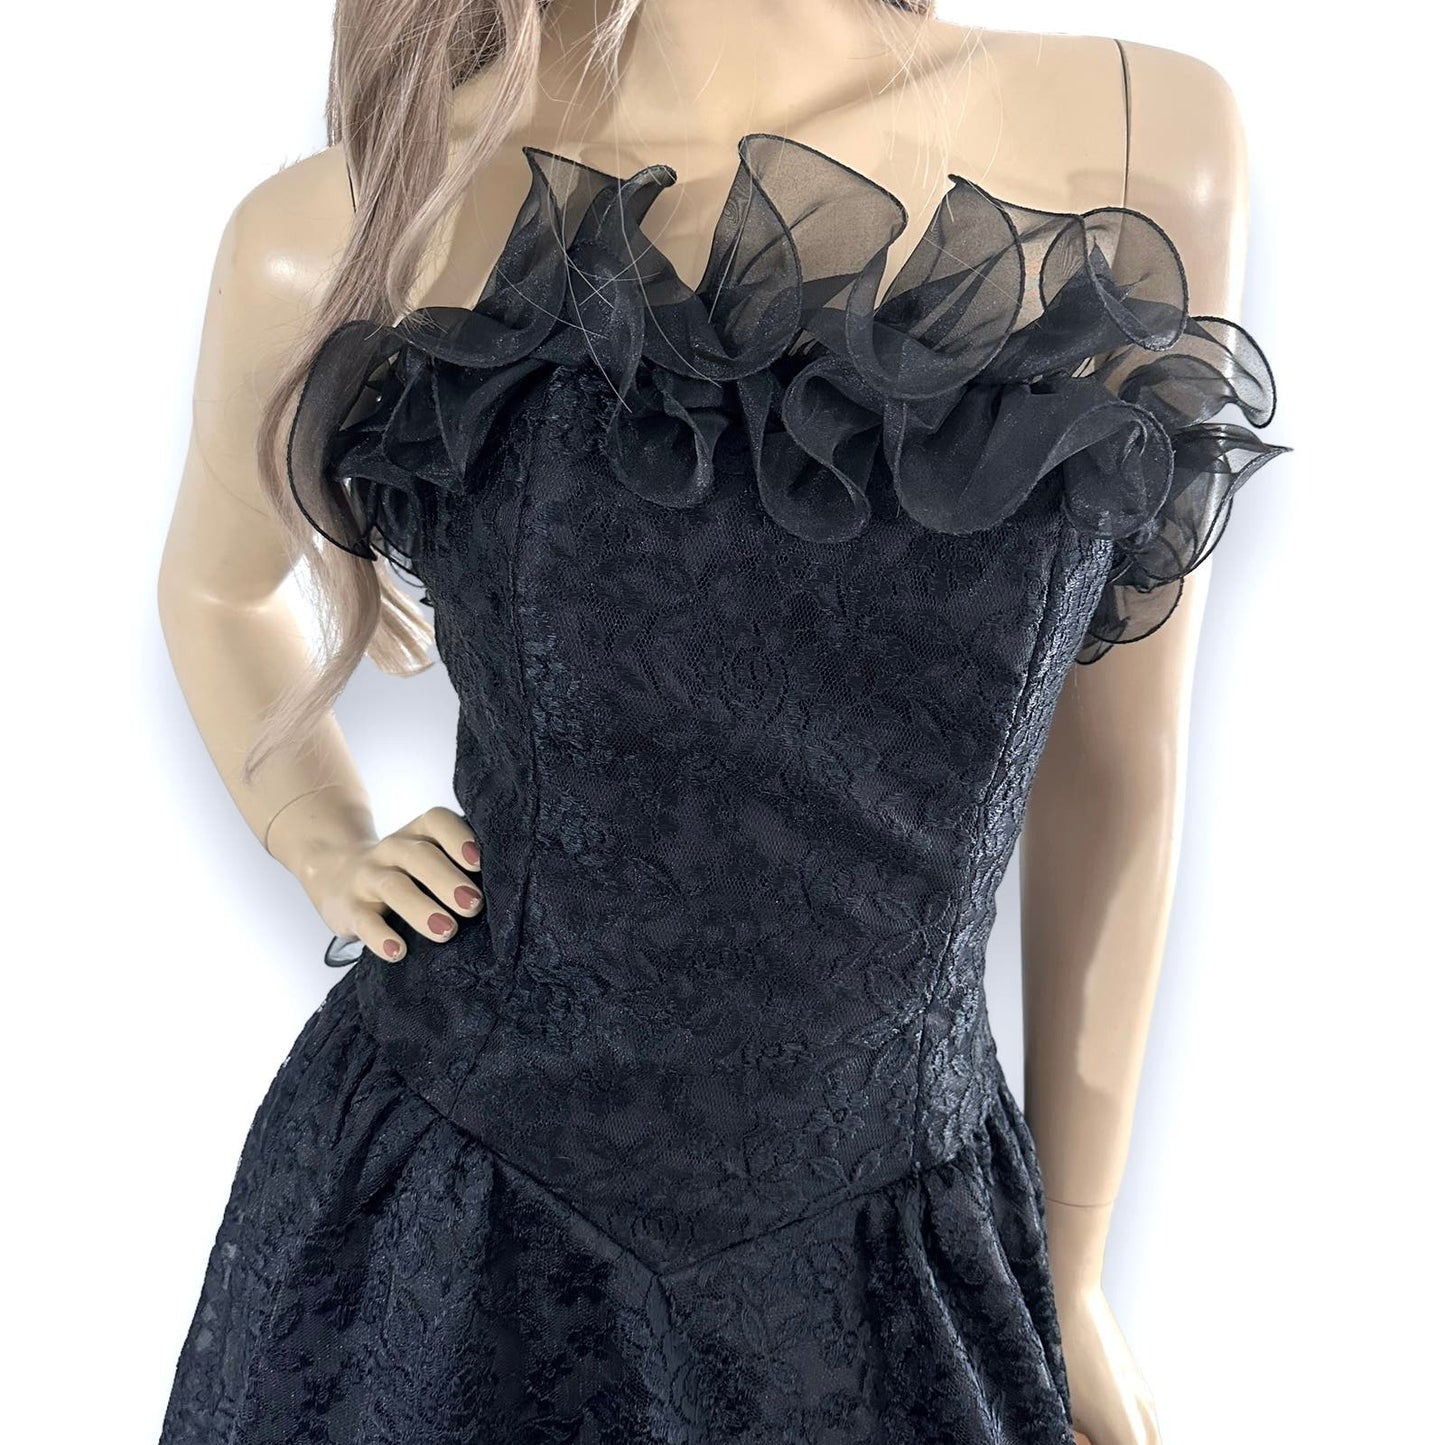 80s Vintage Ruffled Tulle & Lace Black Wedding Dress Size 6